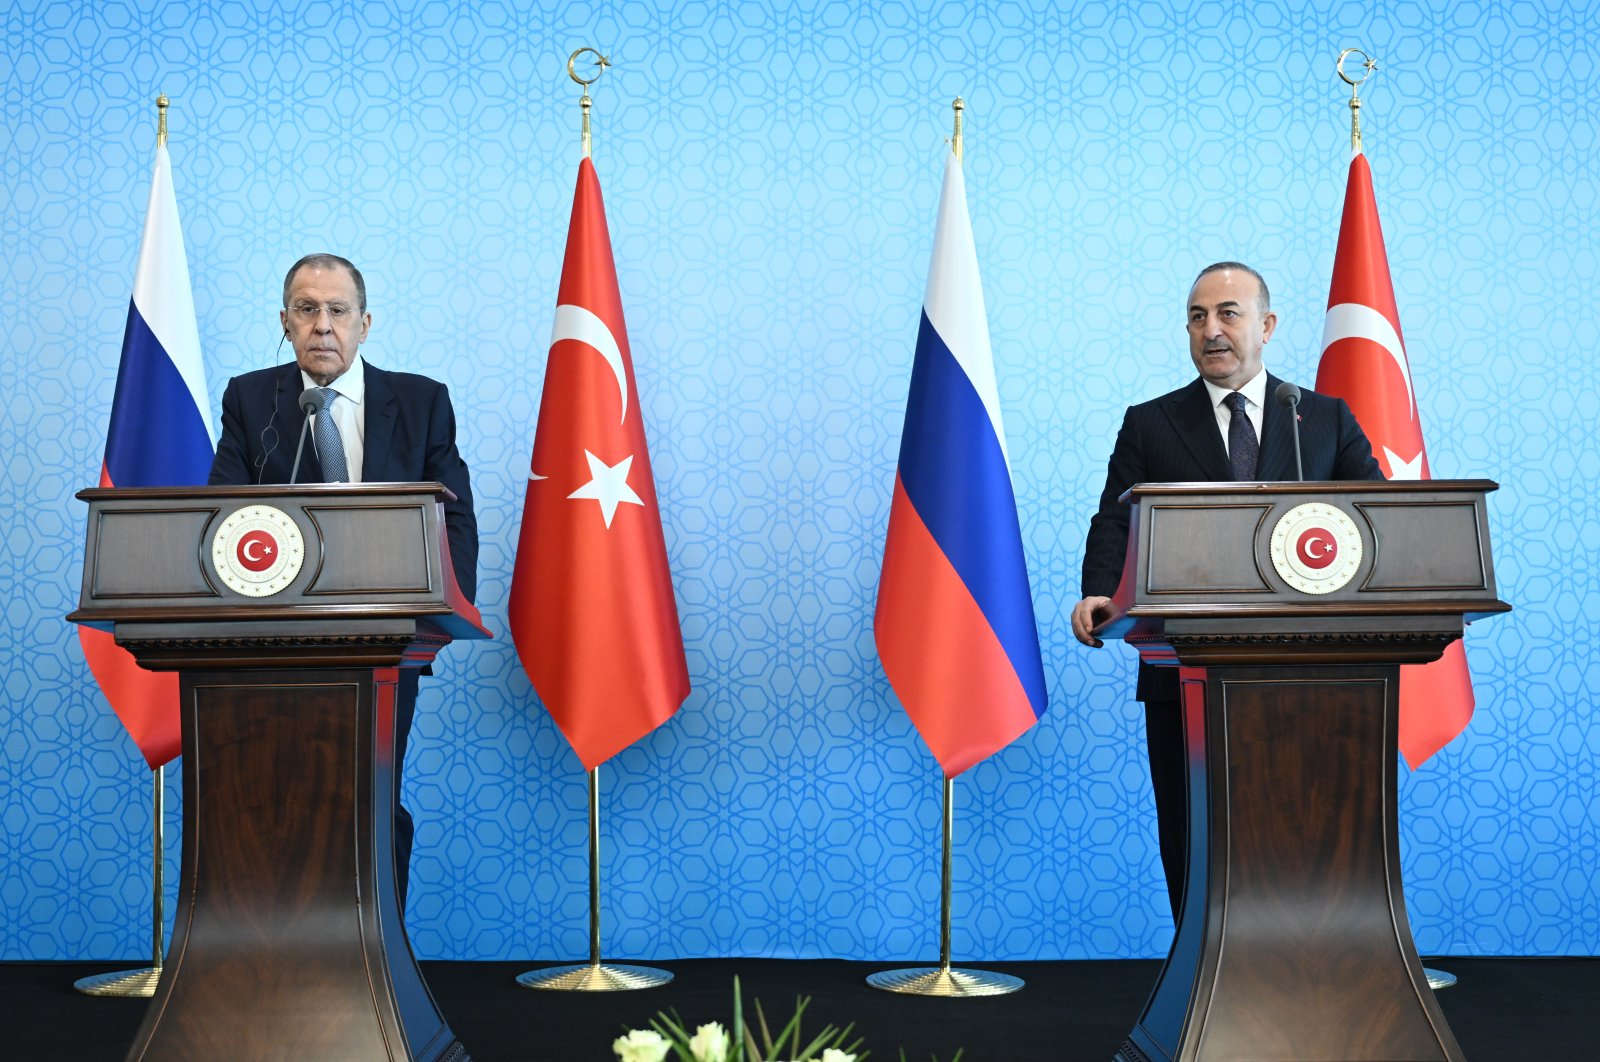 Mevlüt Çavuşoğlu (R) and Sergey Lavrov attend the news conference at the Presidential Complex, in the capital Ankara, Türkiye, April 7, 2023. (AA Photo)